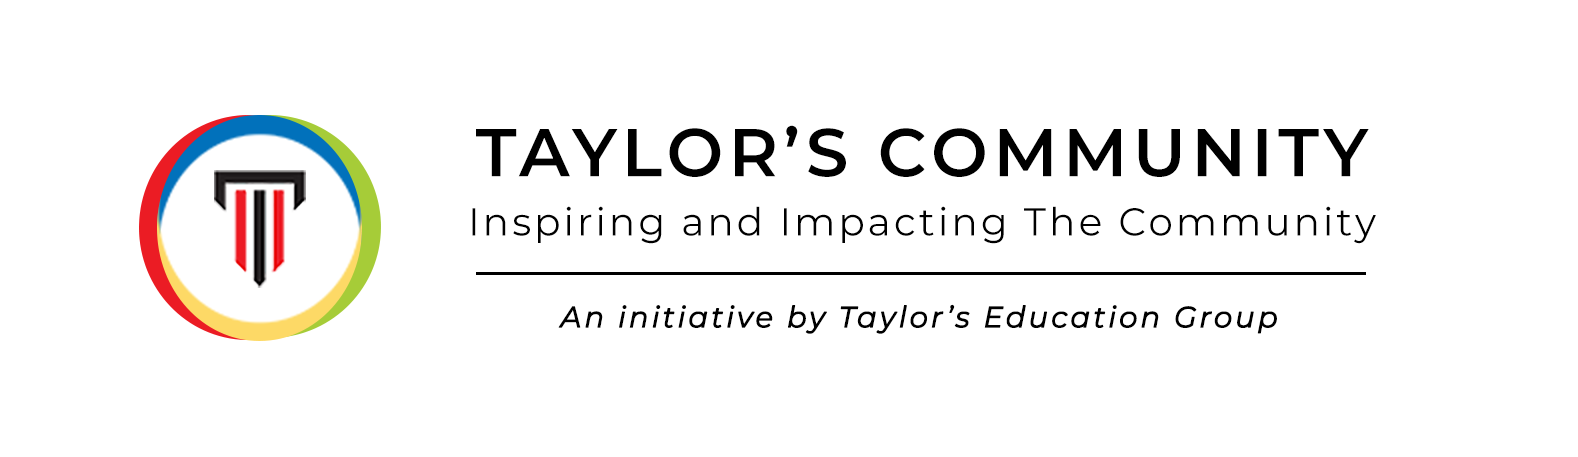 Taylor's Community